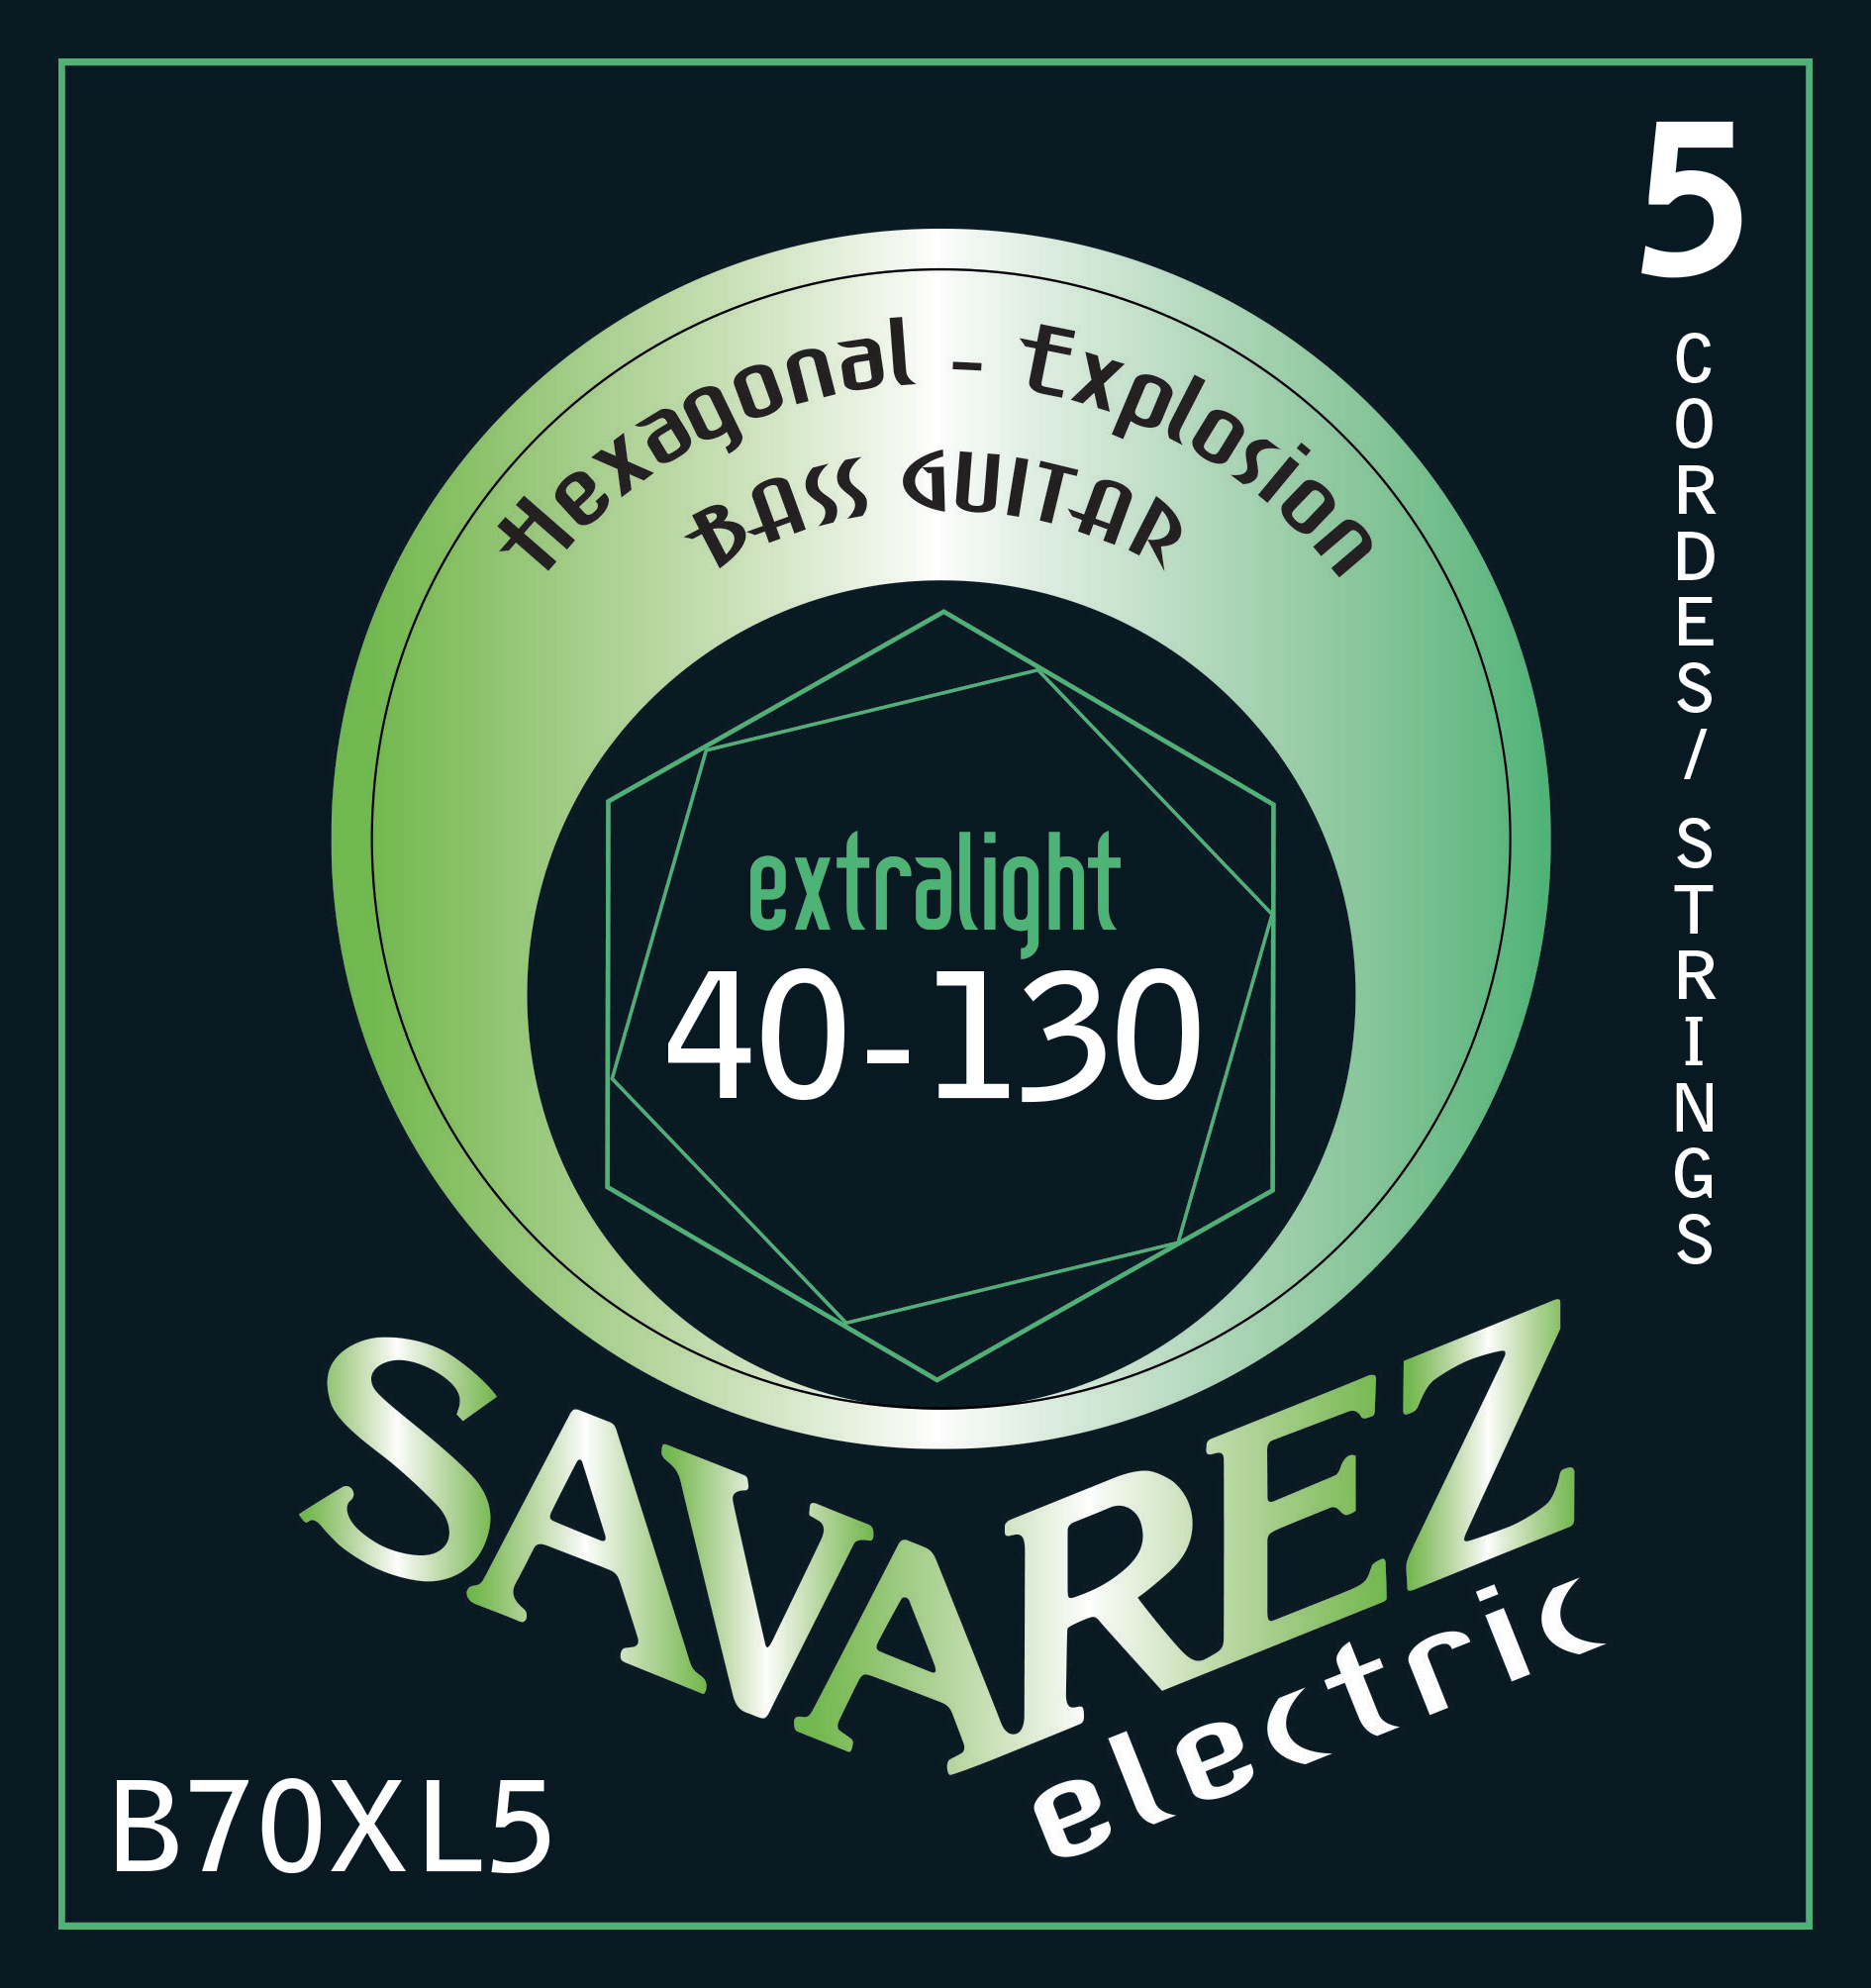 SAVAREZ ELECTRIC HEXAGONAL EXPLOSION BASSE B70XL5